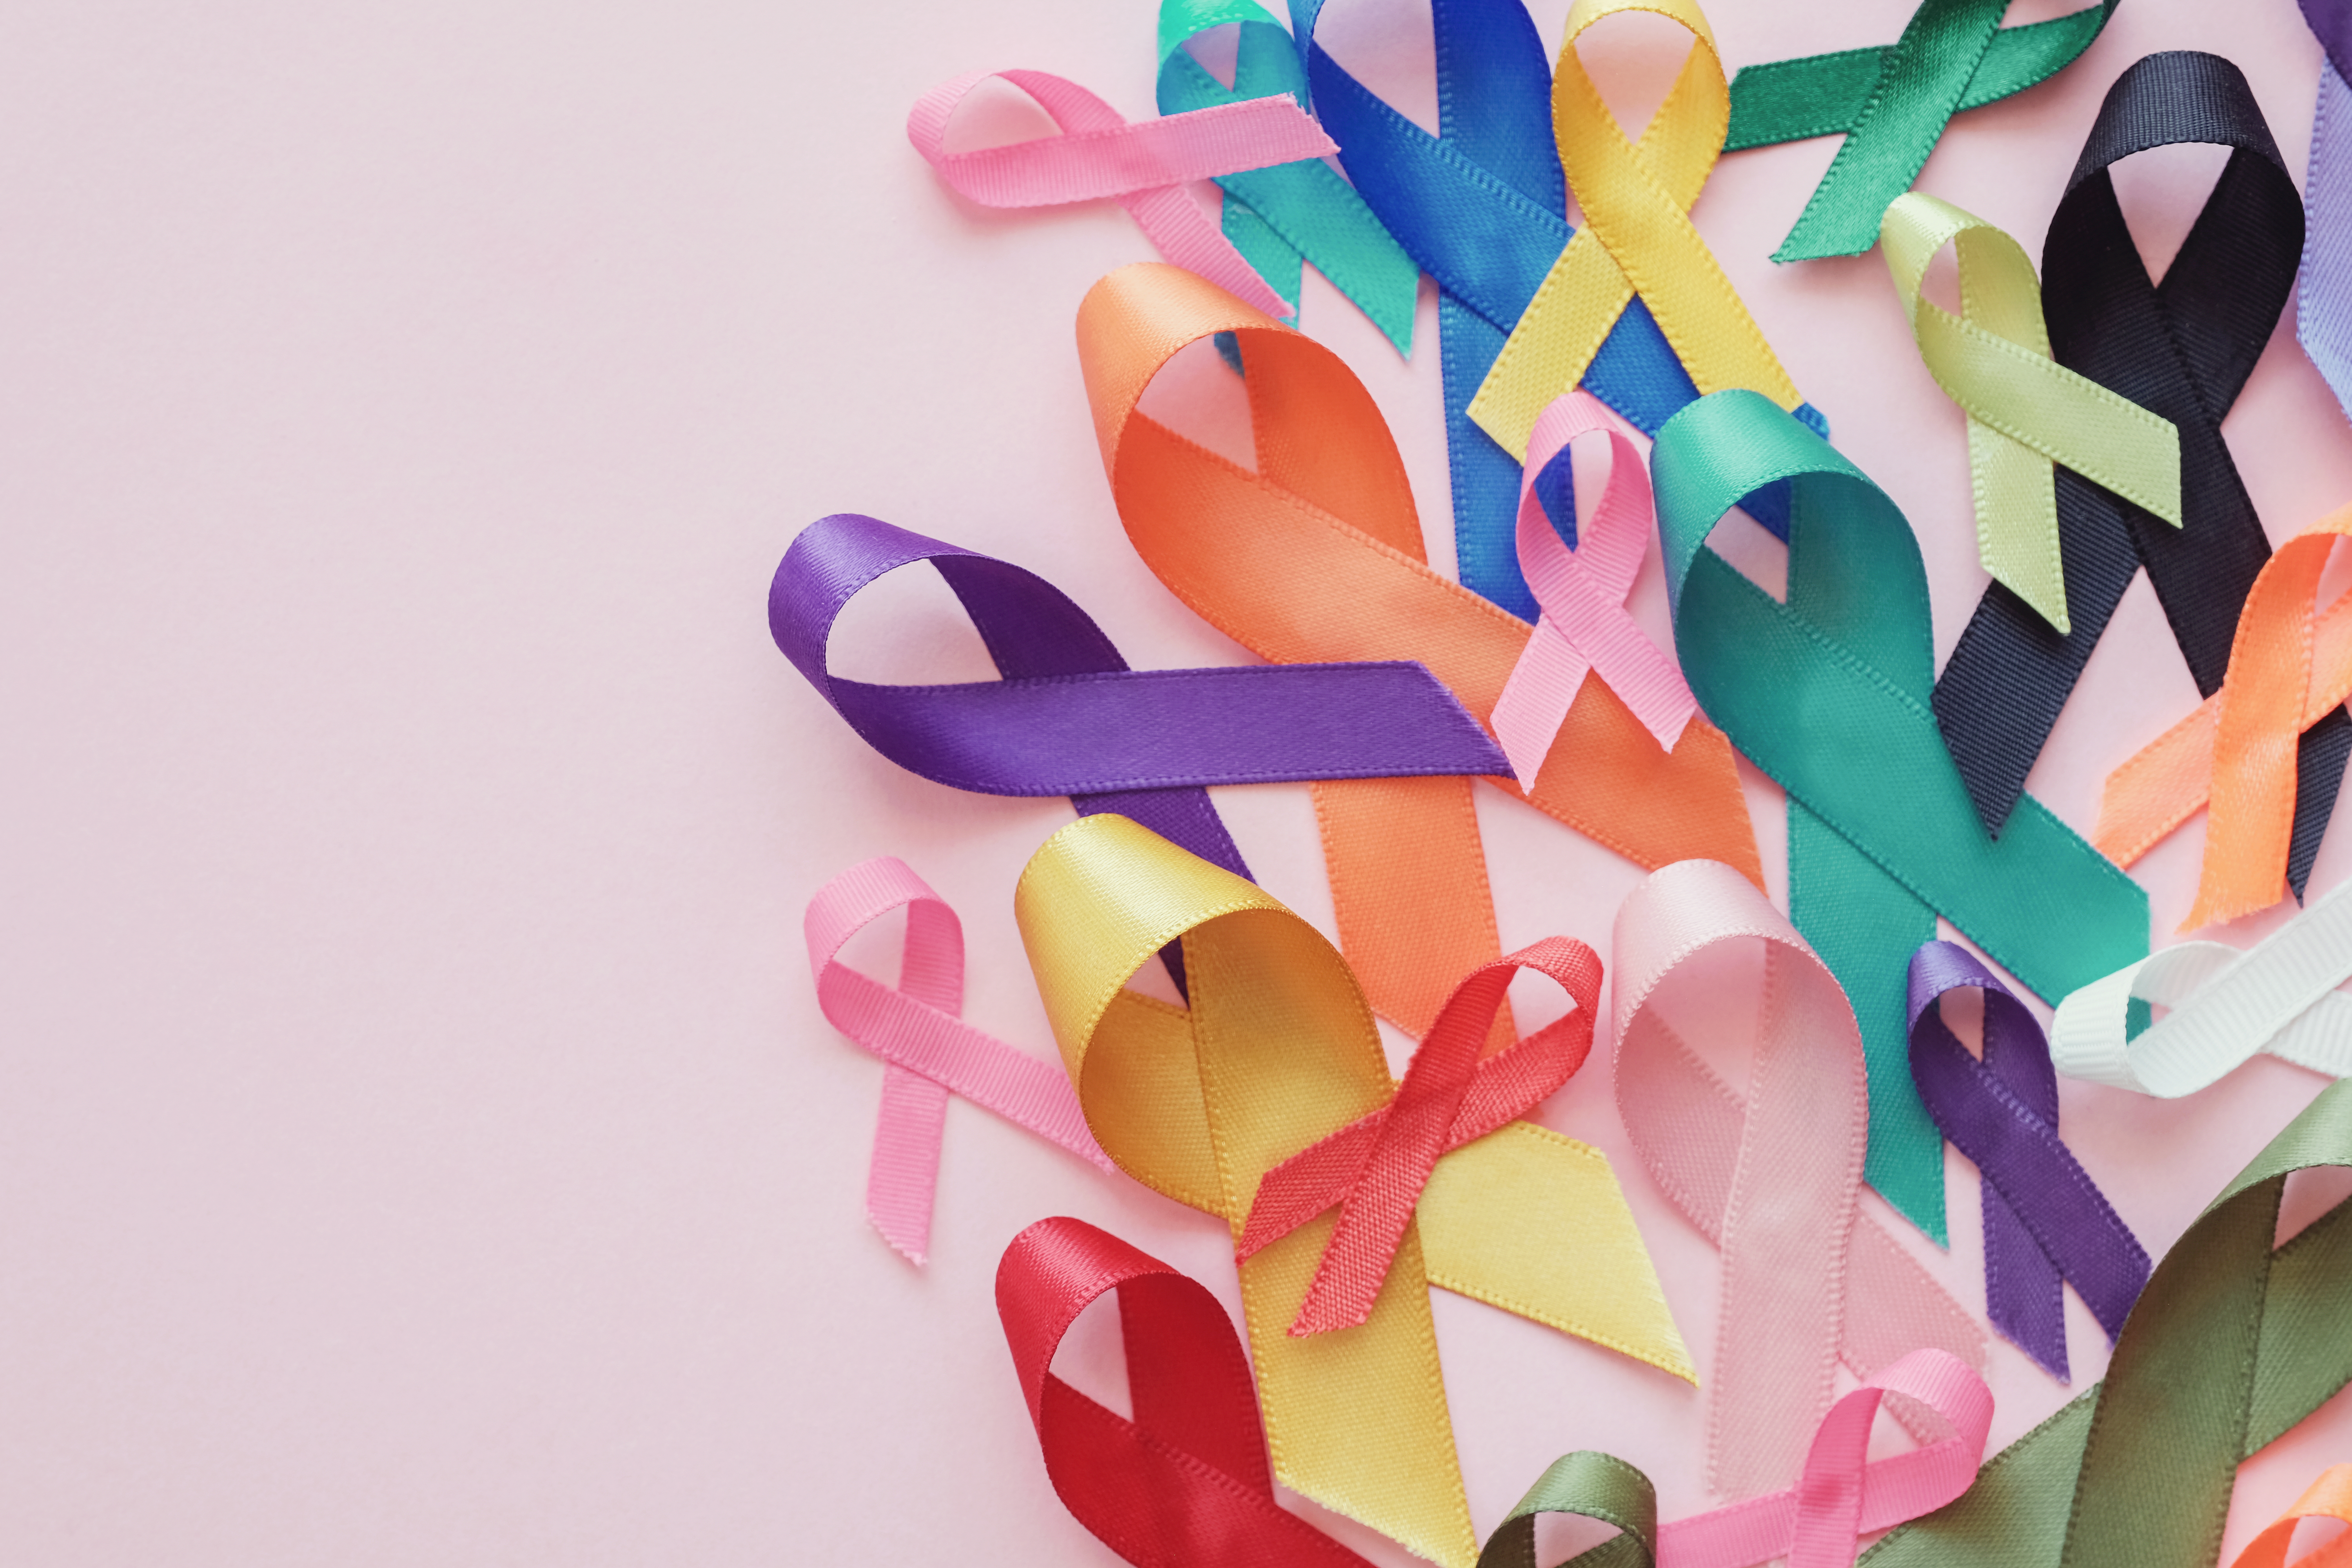 Cancer awareness ribbons